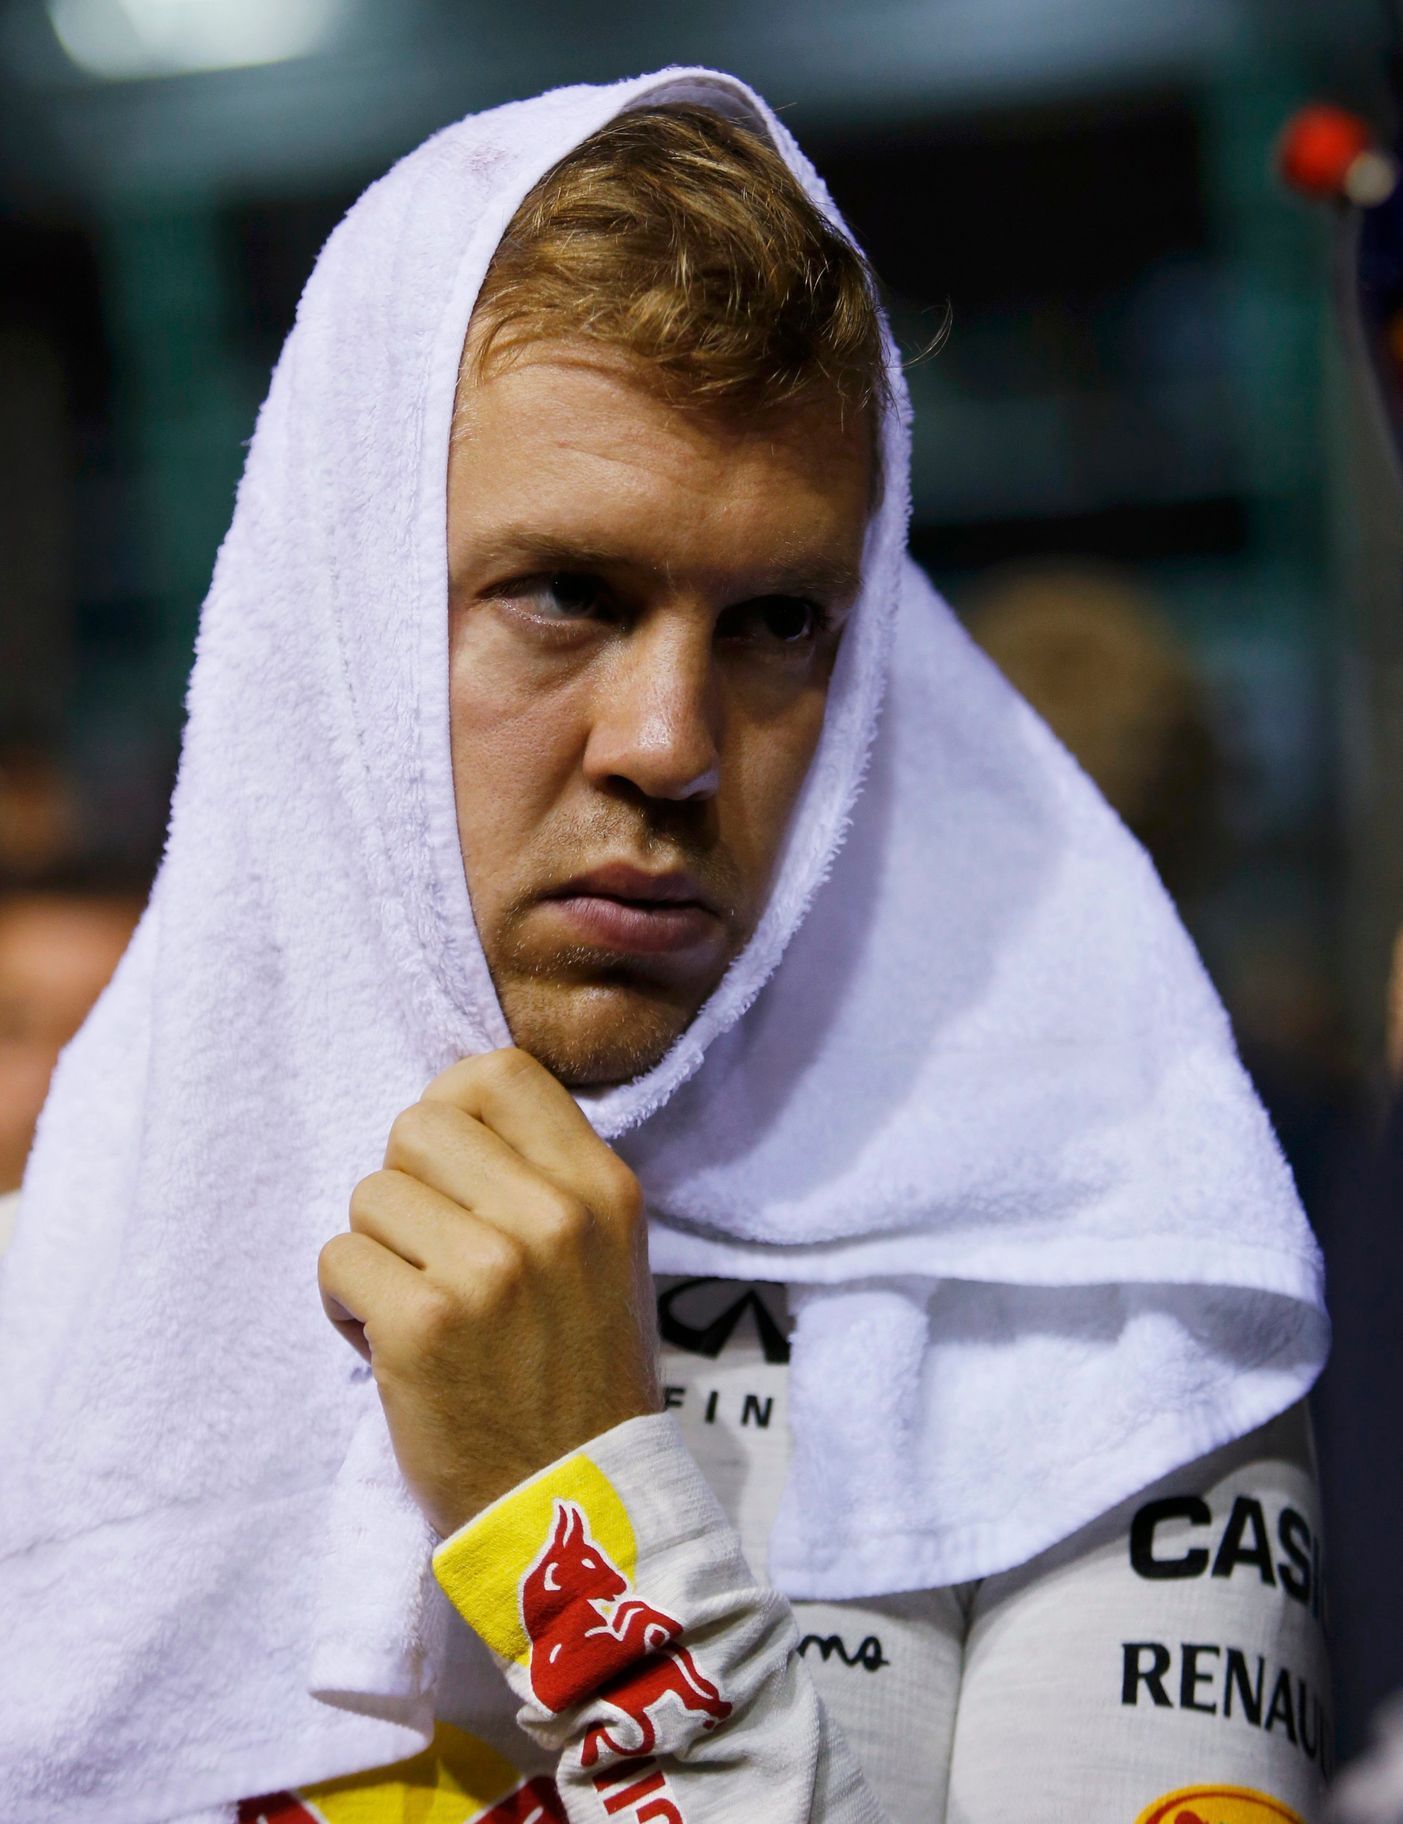 Velká cena Singapuru, Sebastian Vettel